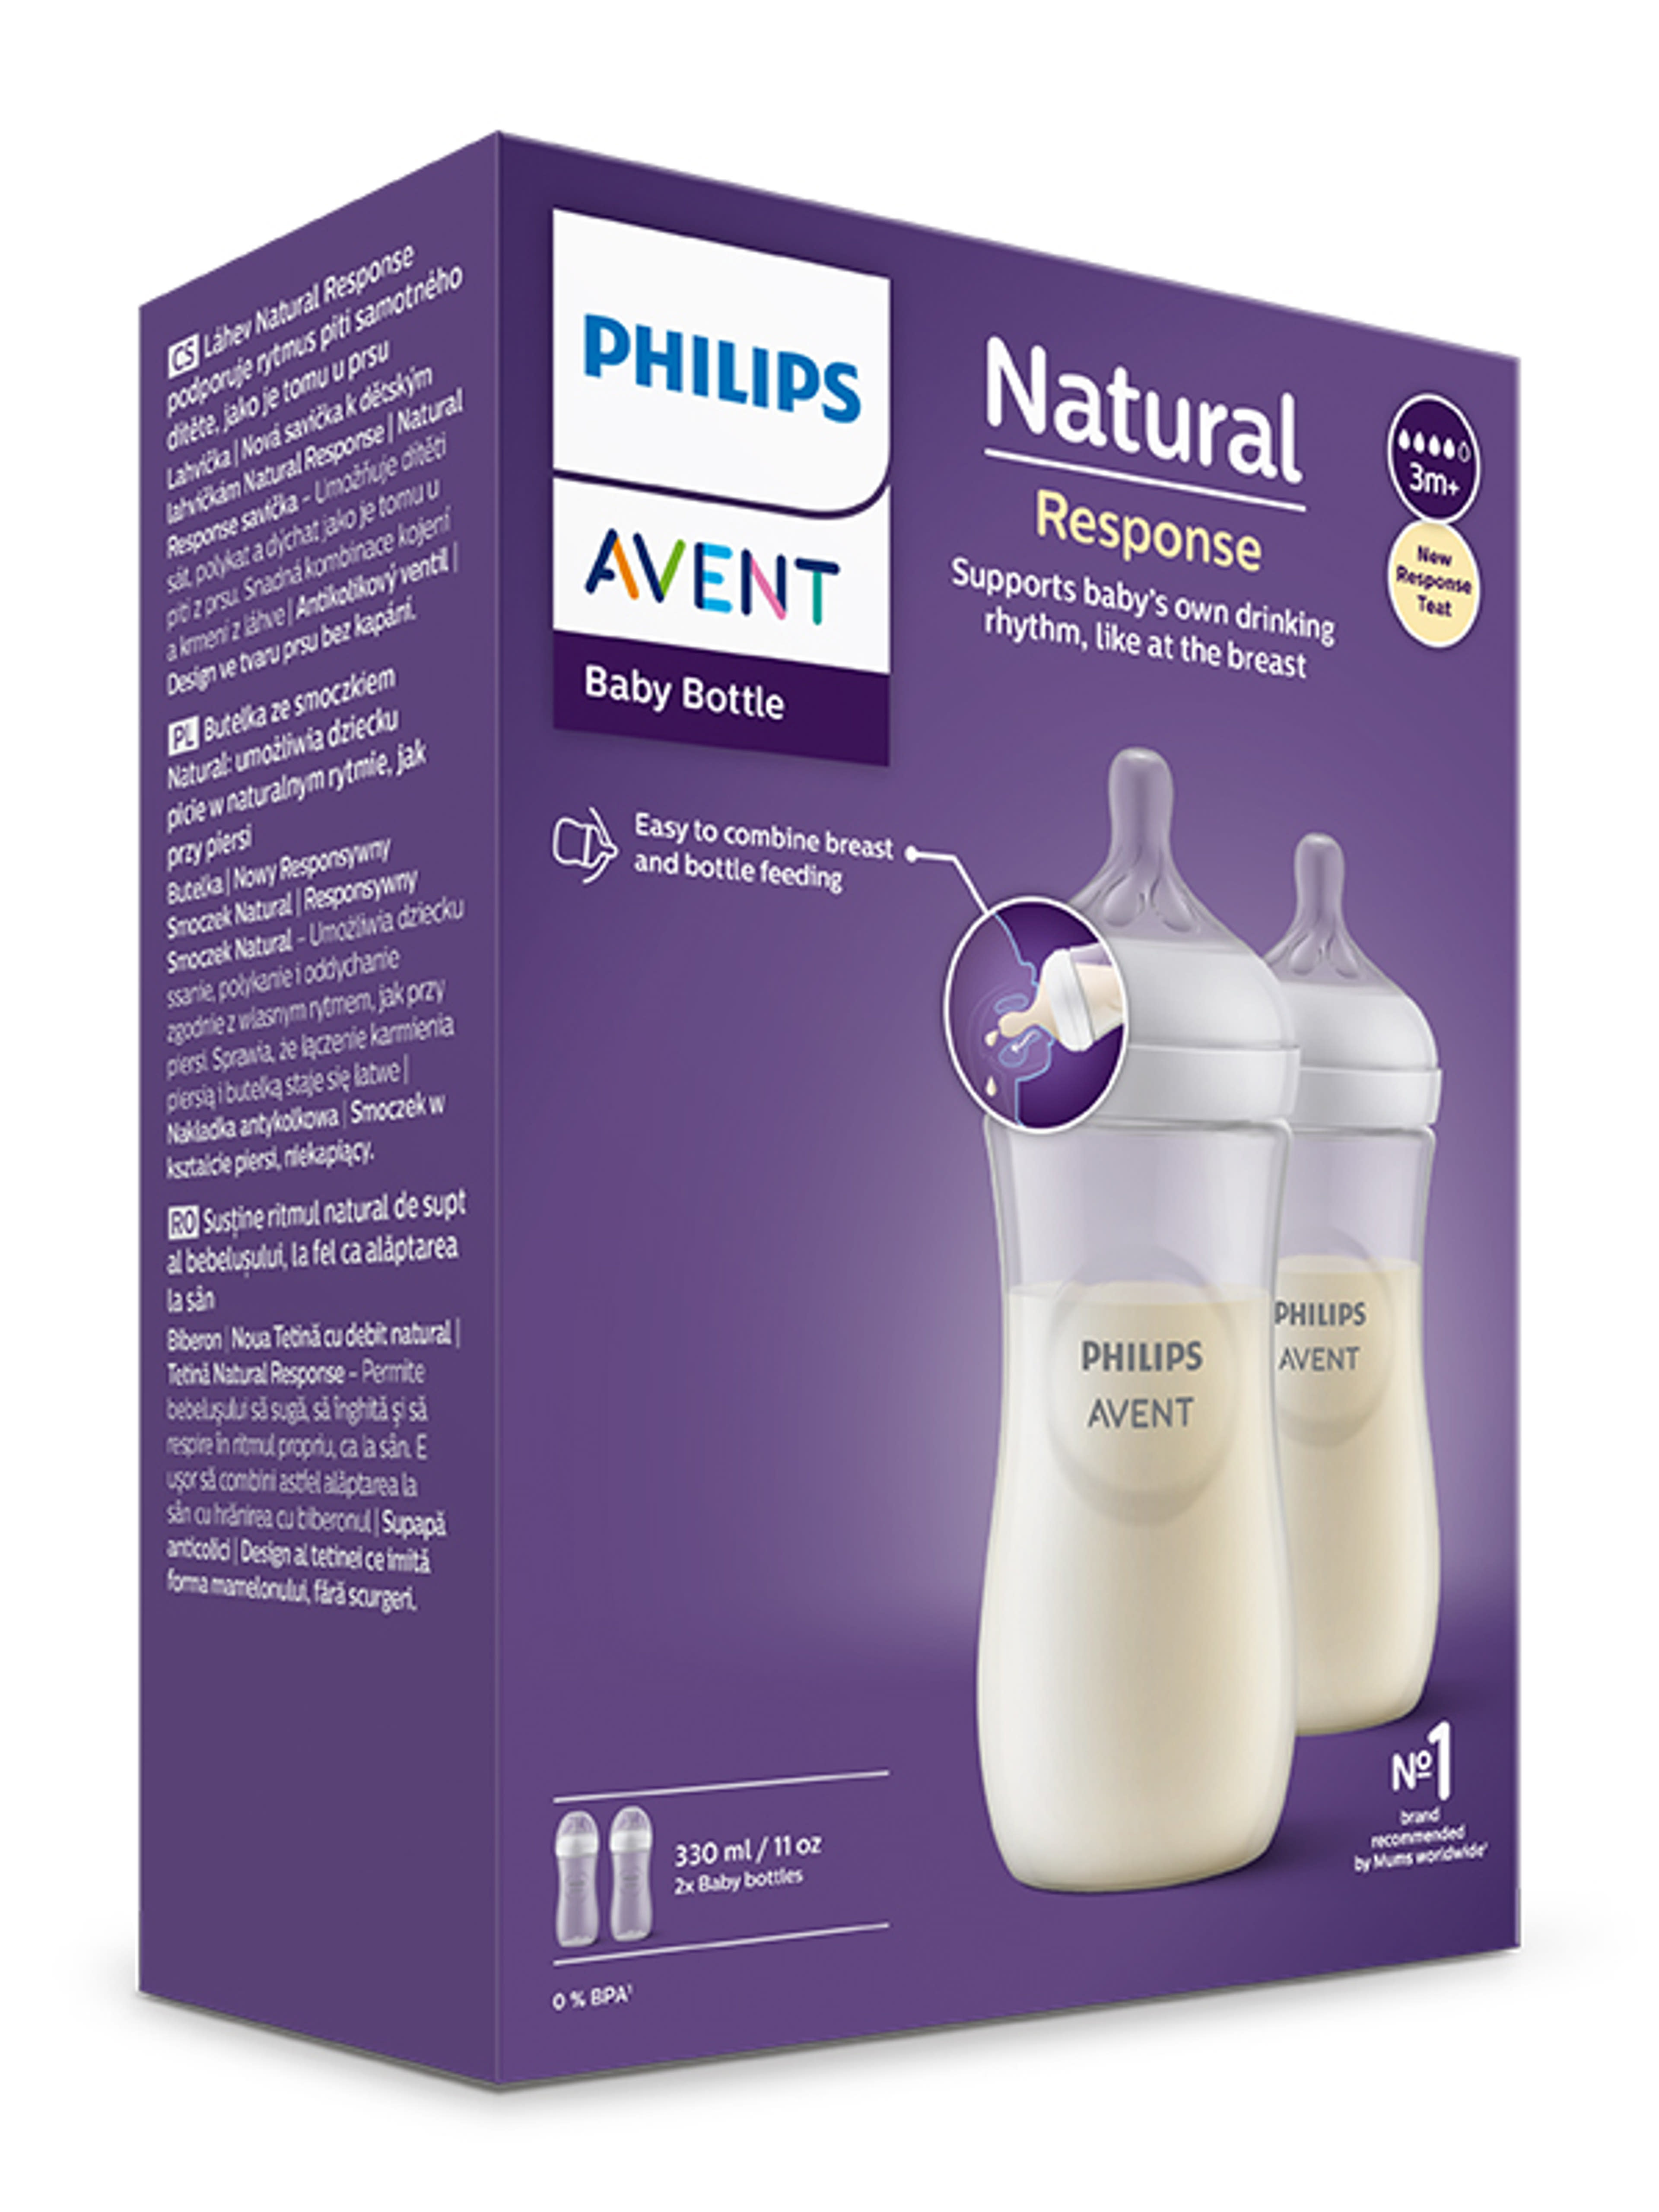 Philips Avent Natural Response cumisüveg 3 hónapos kortól 330 ml - 2 db-3